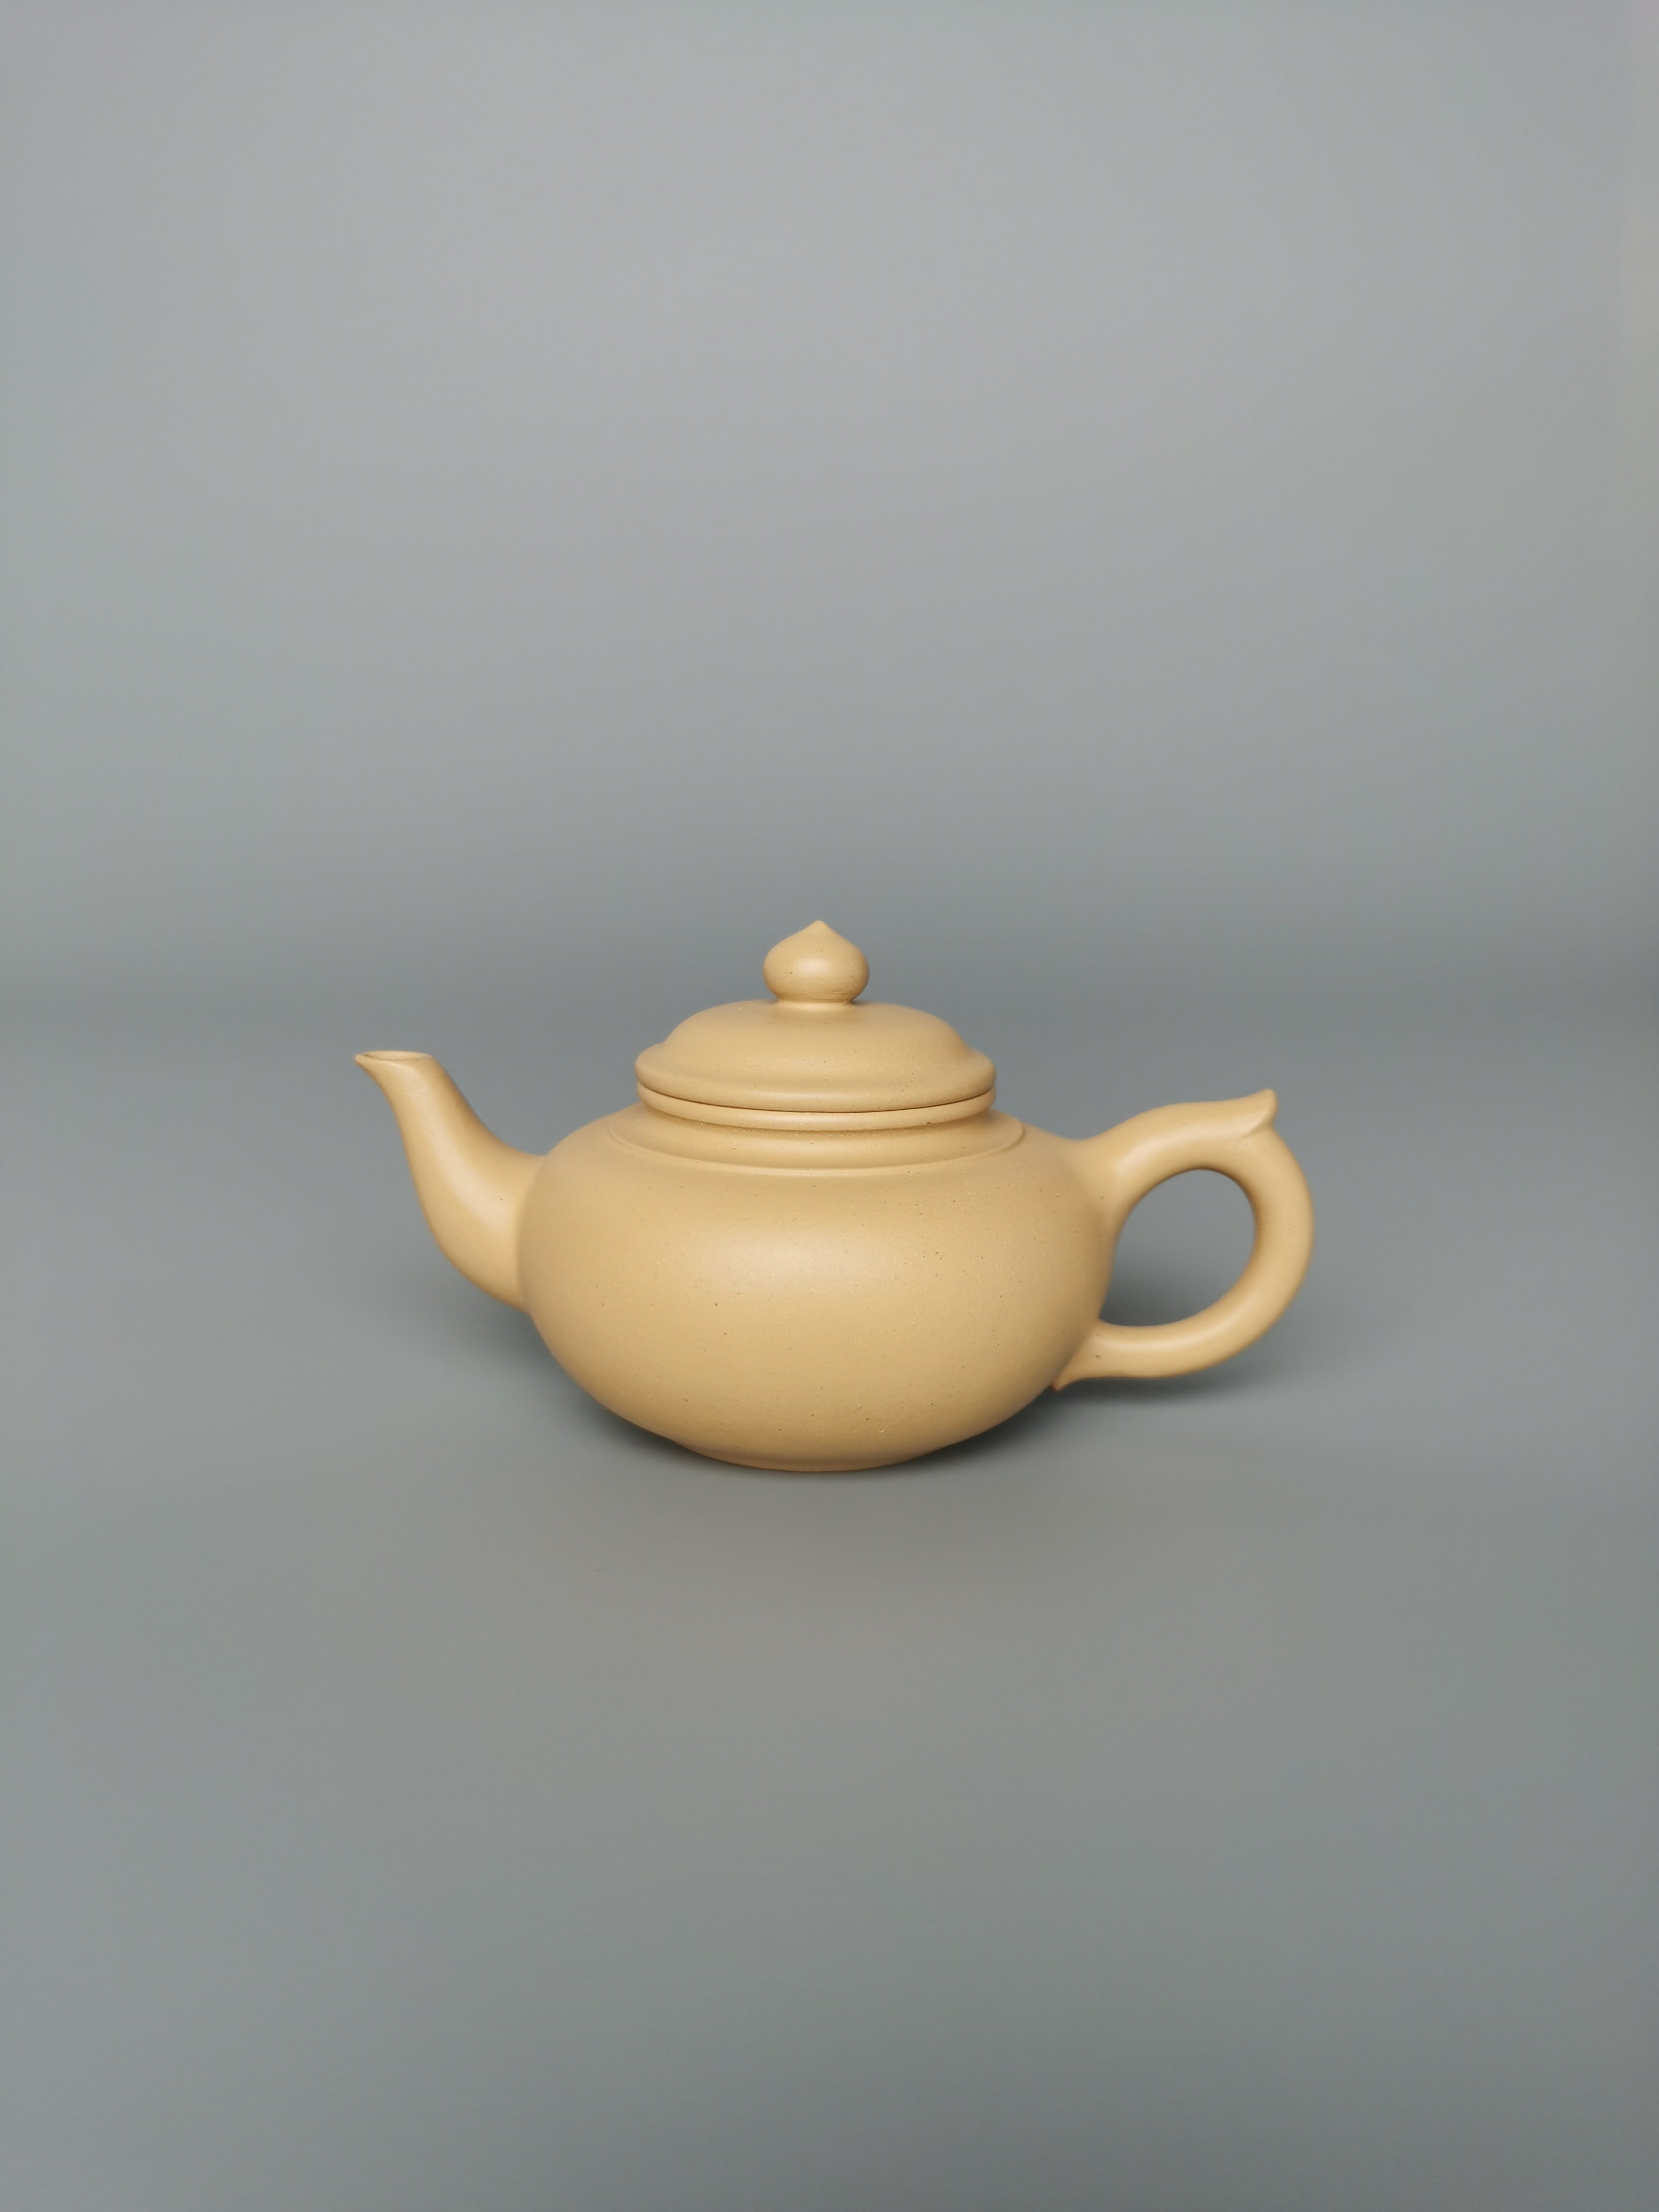 yixing teapot gongfucha teaware small teapot artwork